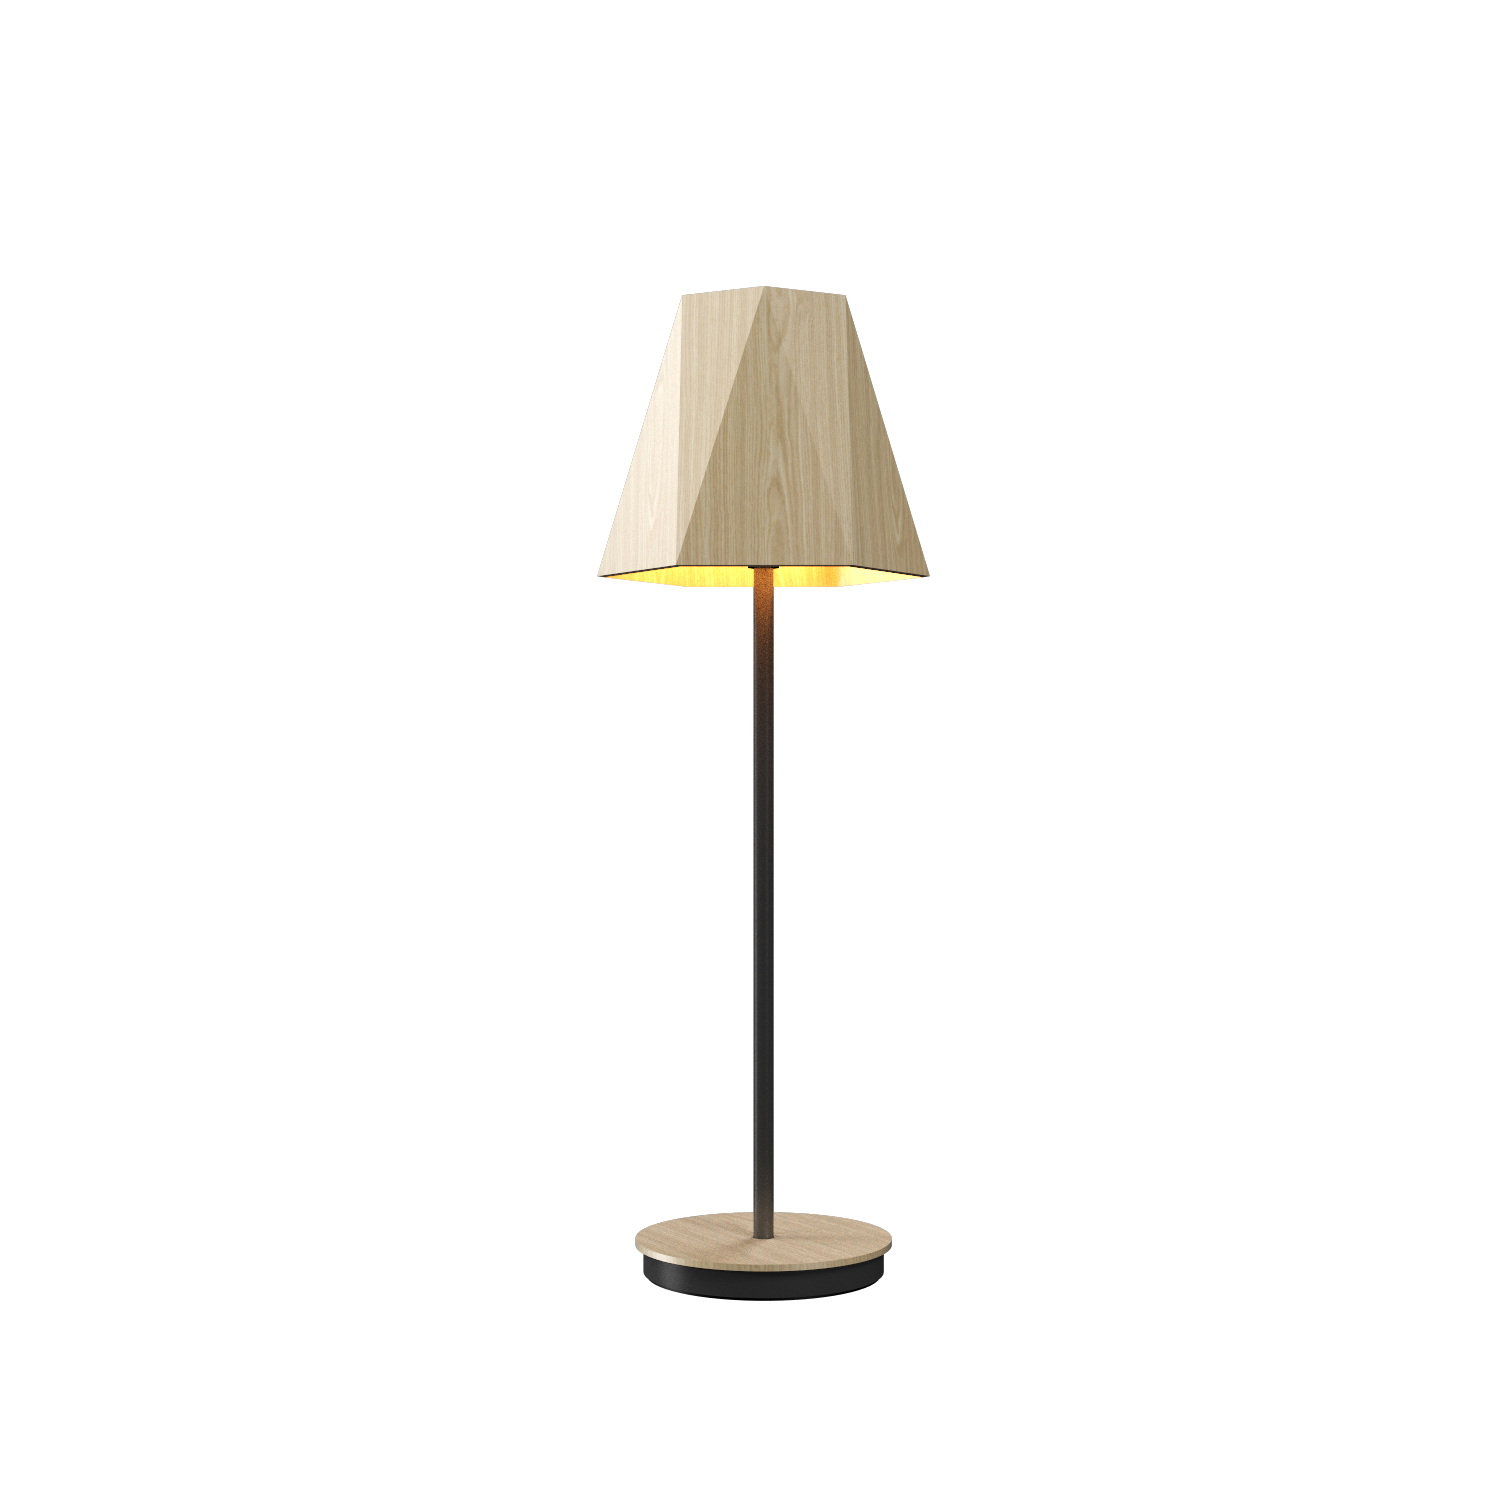 Table Lamp Accord Facetado 7085 - Facetada Line Accord Lighting | 45. Sand